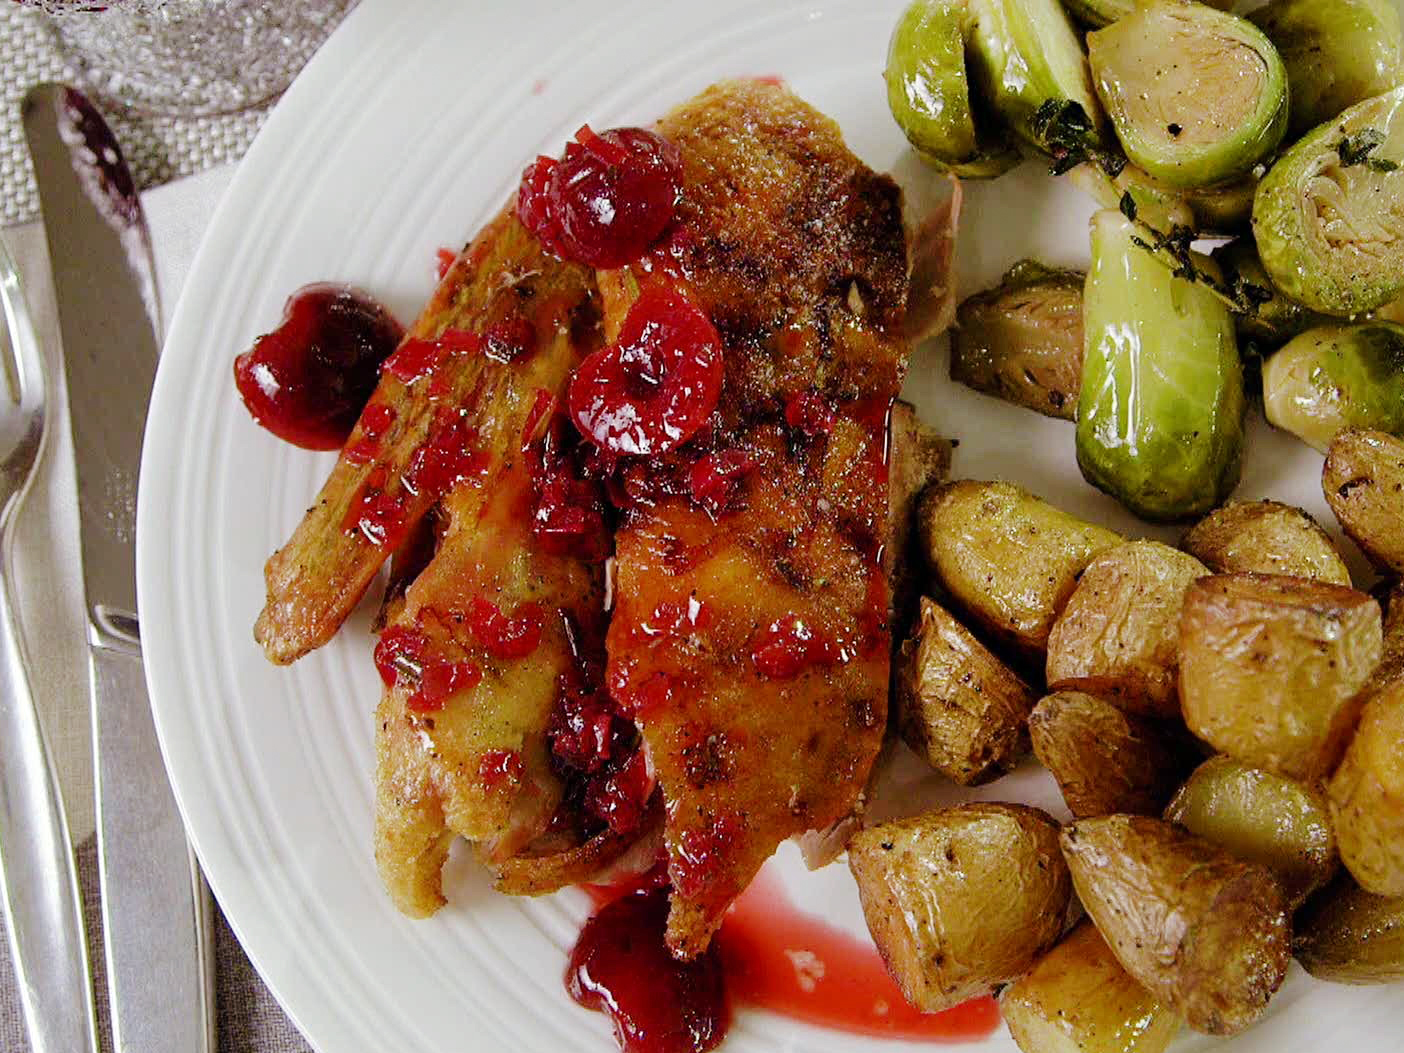 https://www.foodnetwork.com/content/dam/images/food/fullset/2013/5/15/0/ED0308H_crisp-tender-roast-duck-with-cherry-rosemary-sauce-recipe_s4x3.jpg